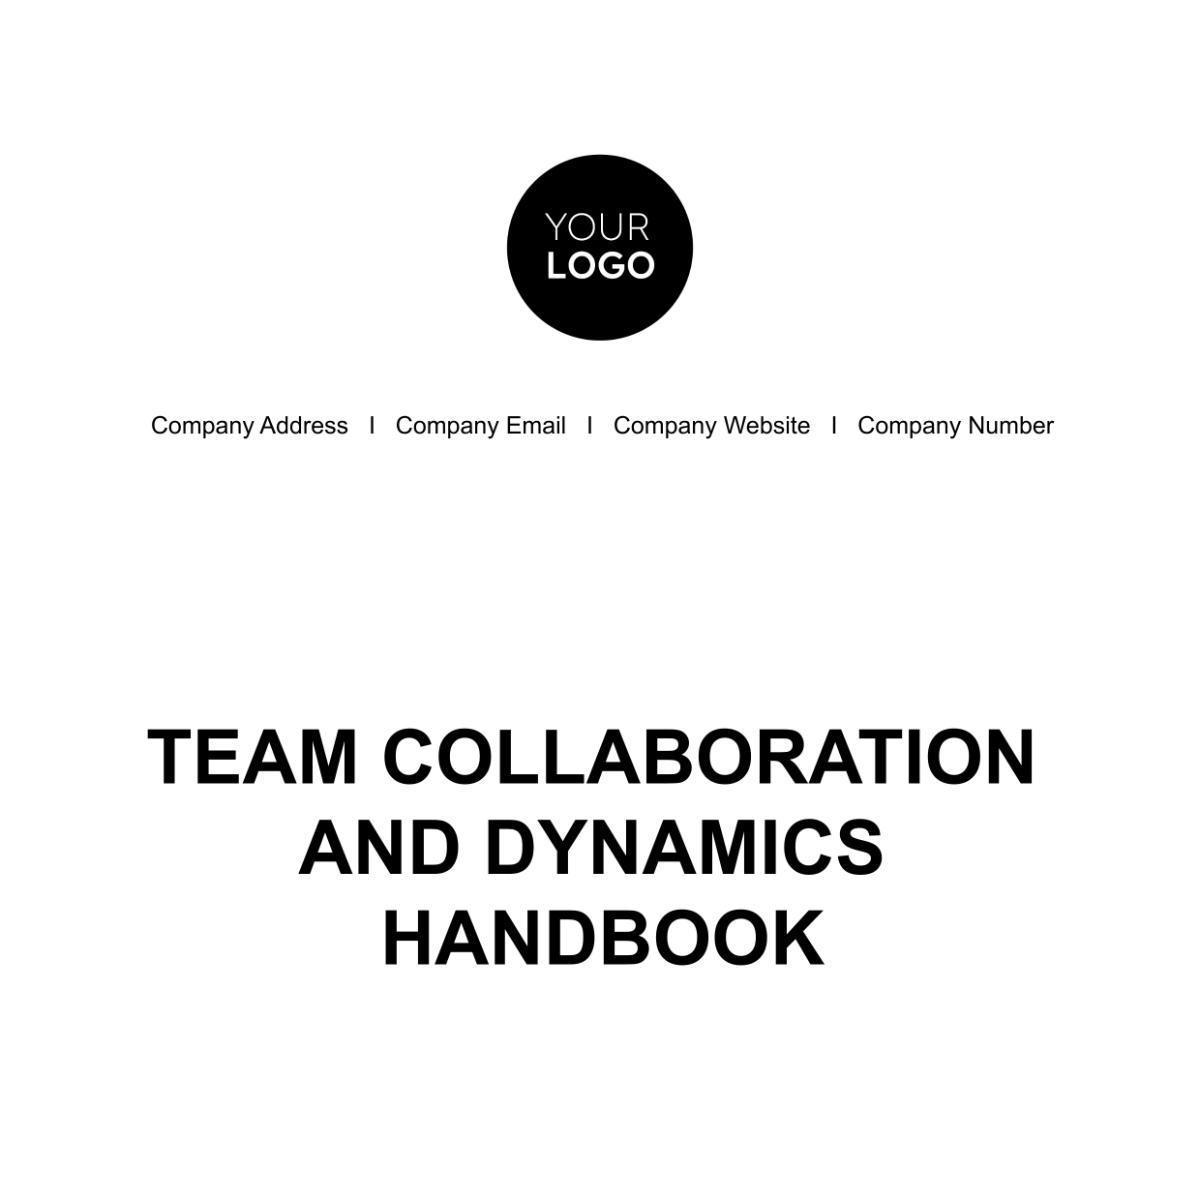 Team Collaboration & Dynamics Handbook HR Template